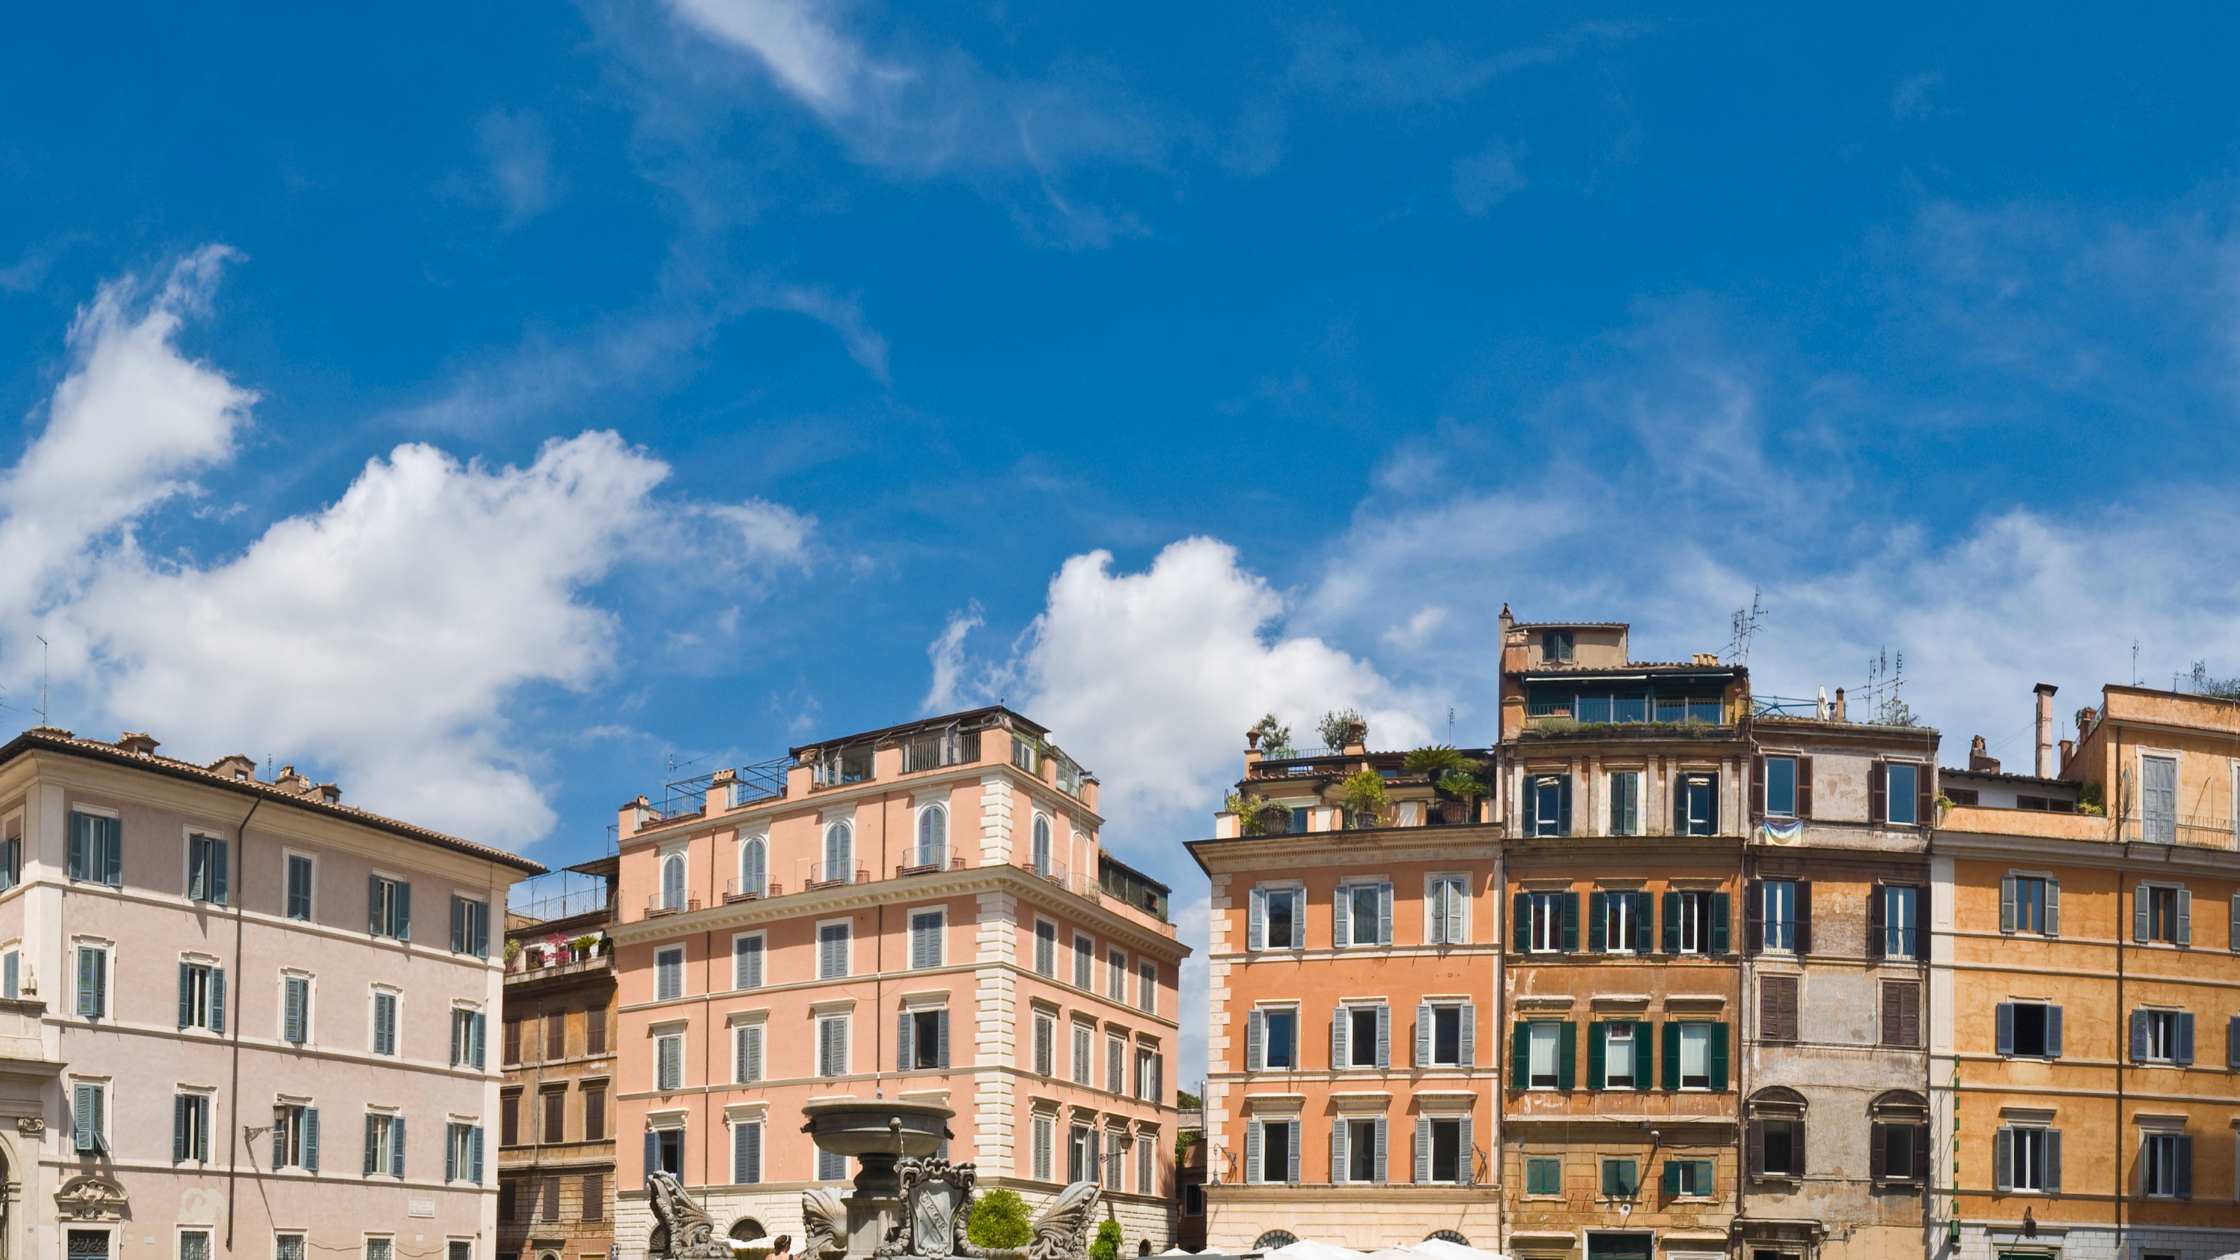 The 5 best hotels in Trastevere, Rome